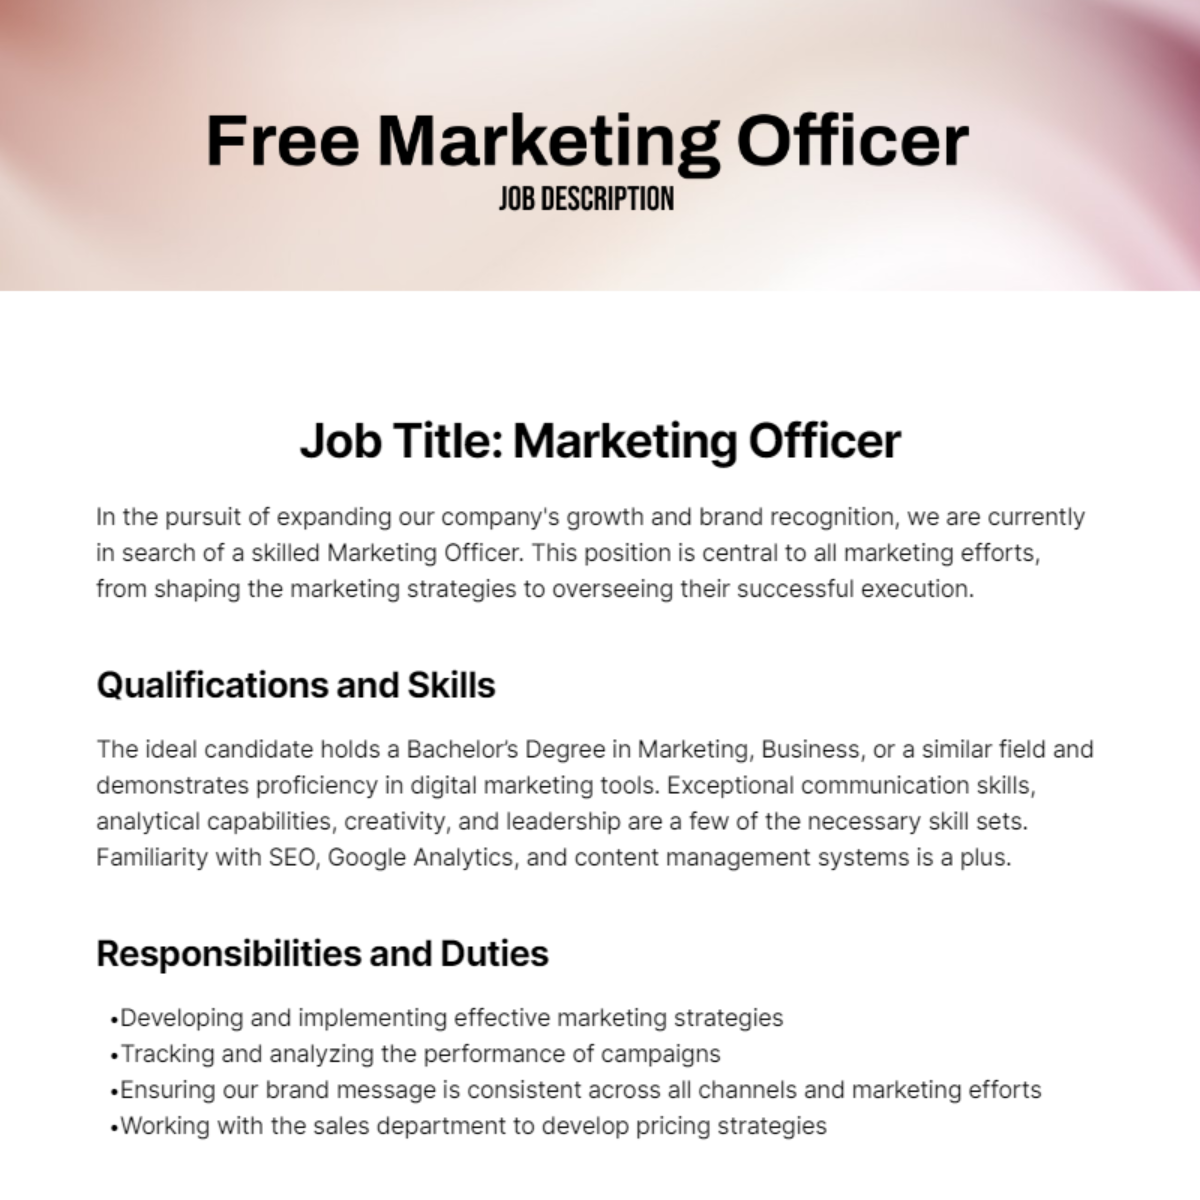 Free Marketing Officer Job Description Template